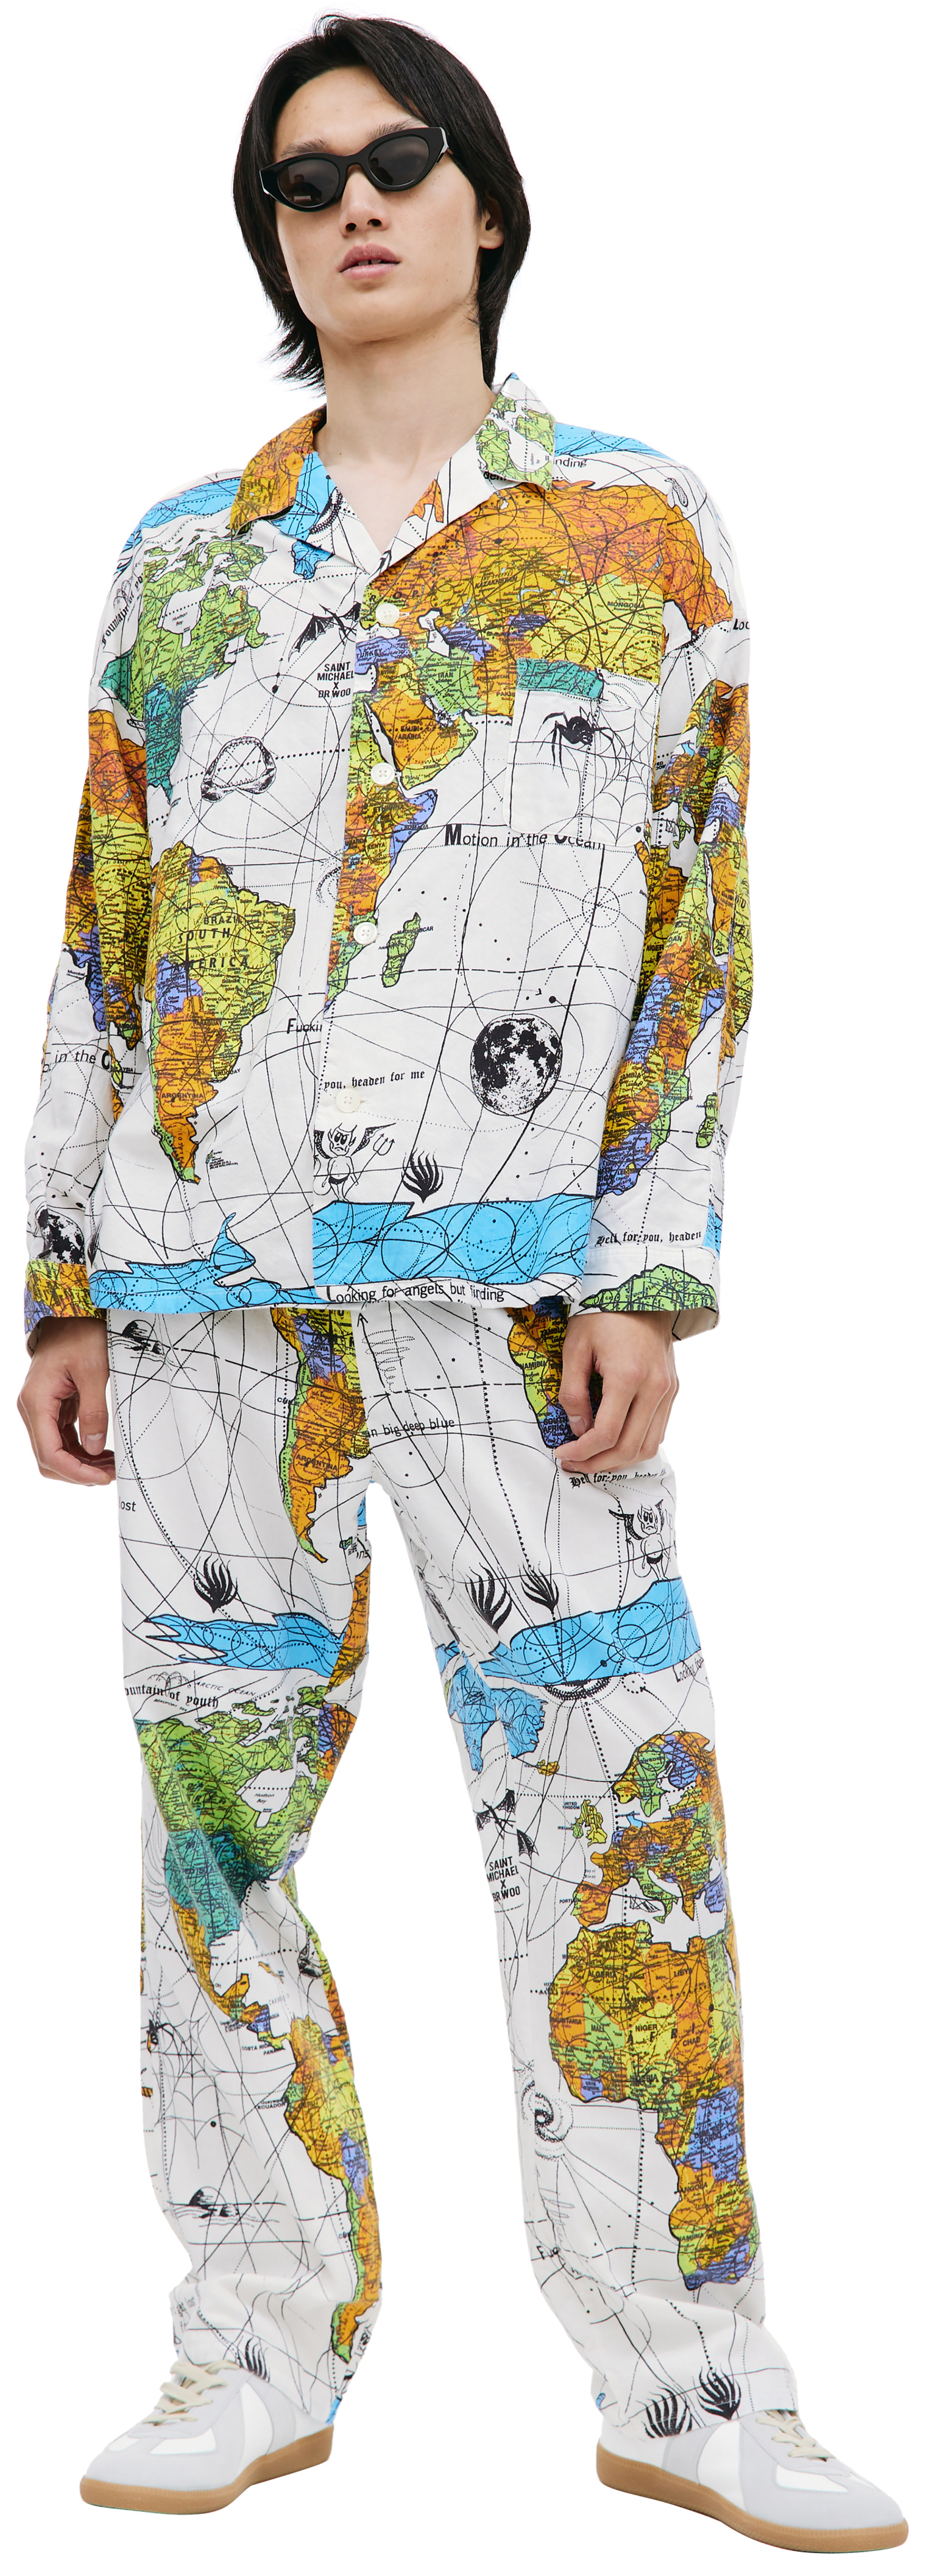 Saint Michael Saint Michael x Dr. Woo world map shirt